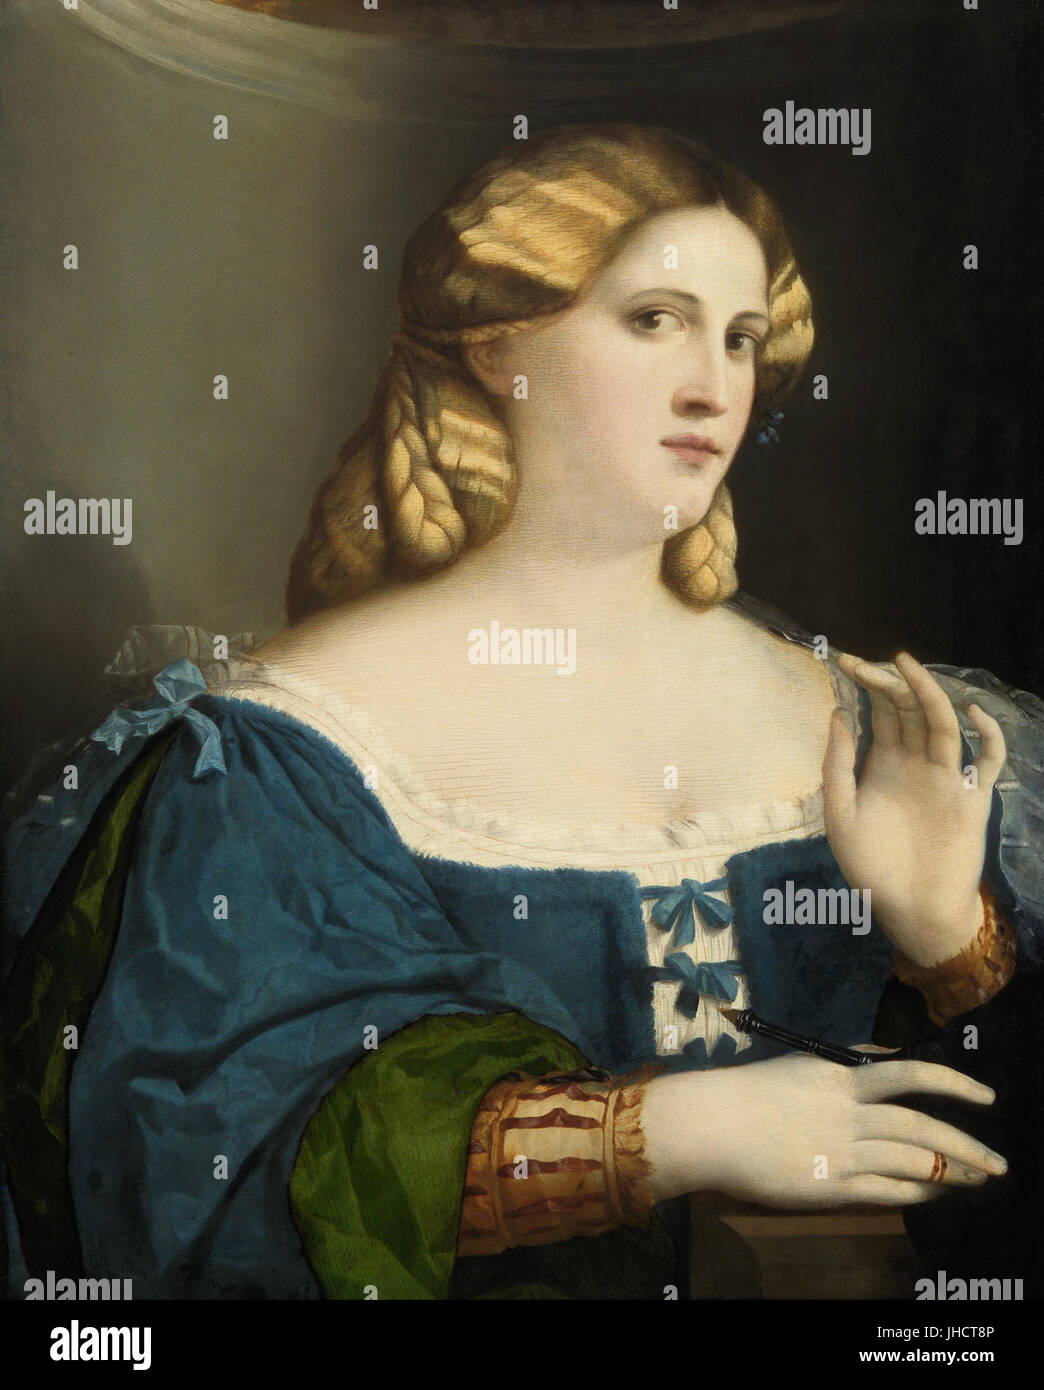 Jacopo Negretti, called Palma il Vecchio - Young Woman in a Blue Dress, with Fan - Stock Photo